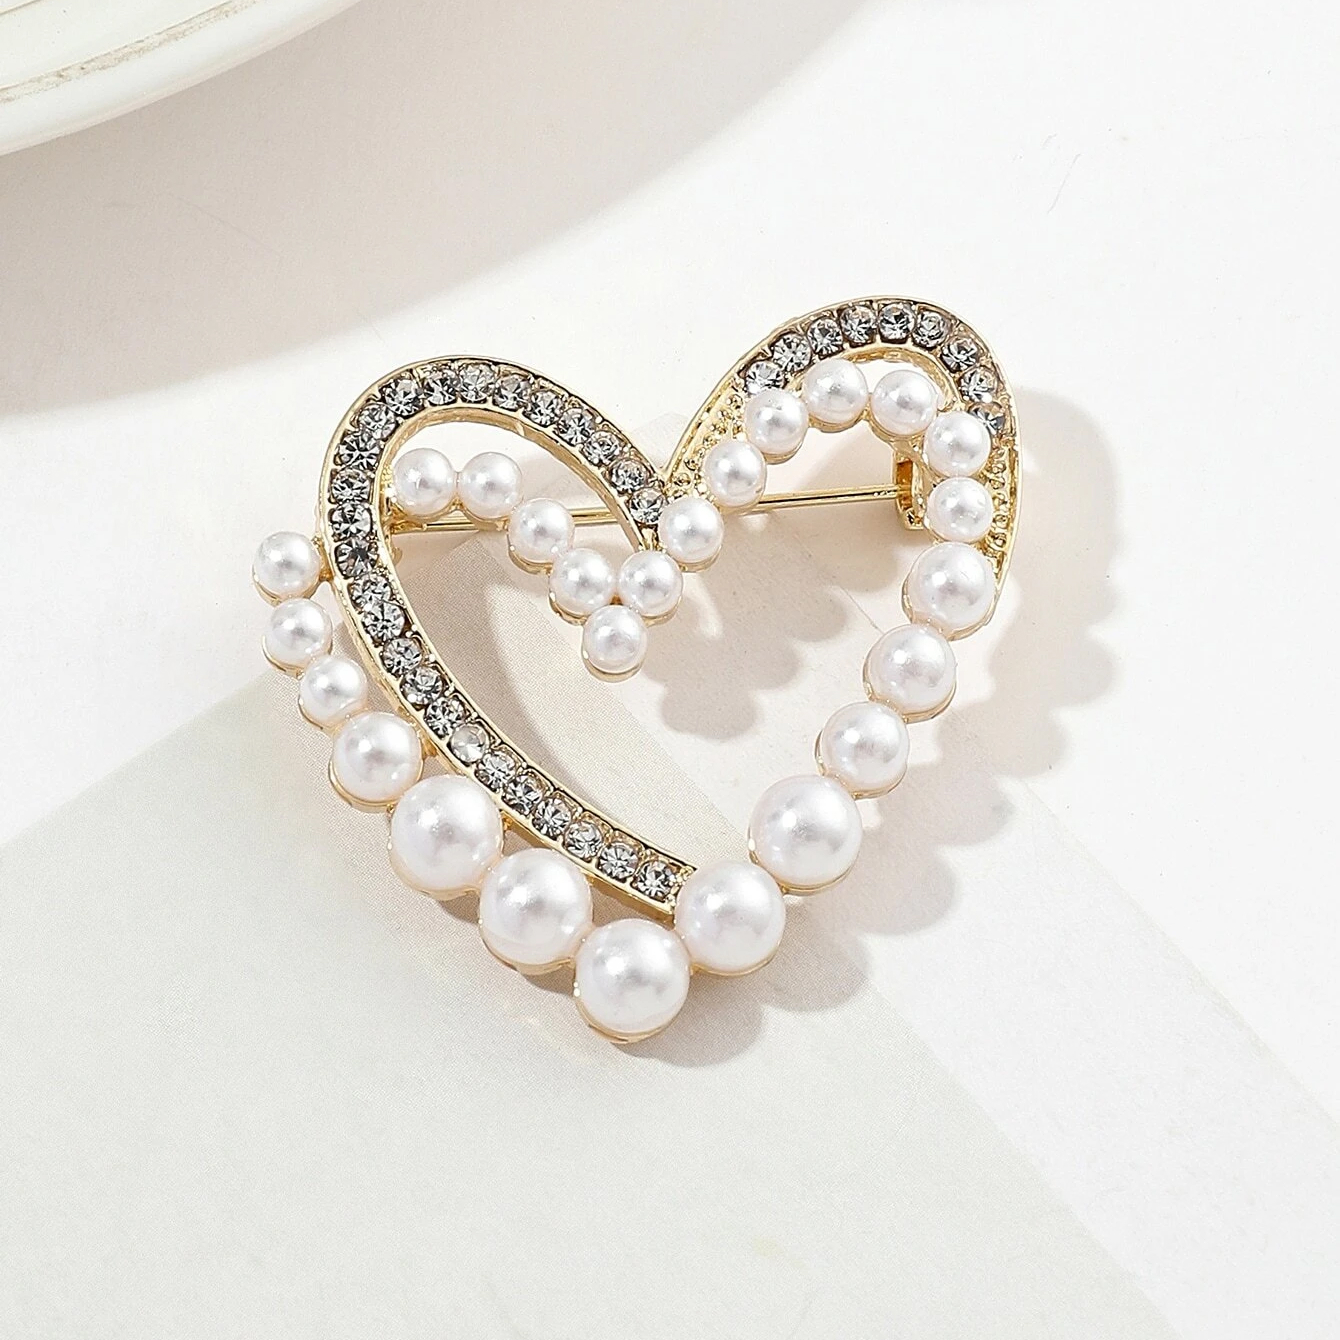 Elegant Double Layer Heart Brooch with Rhinestone & Imitation Pearl 